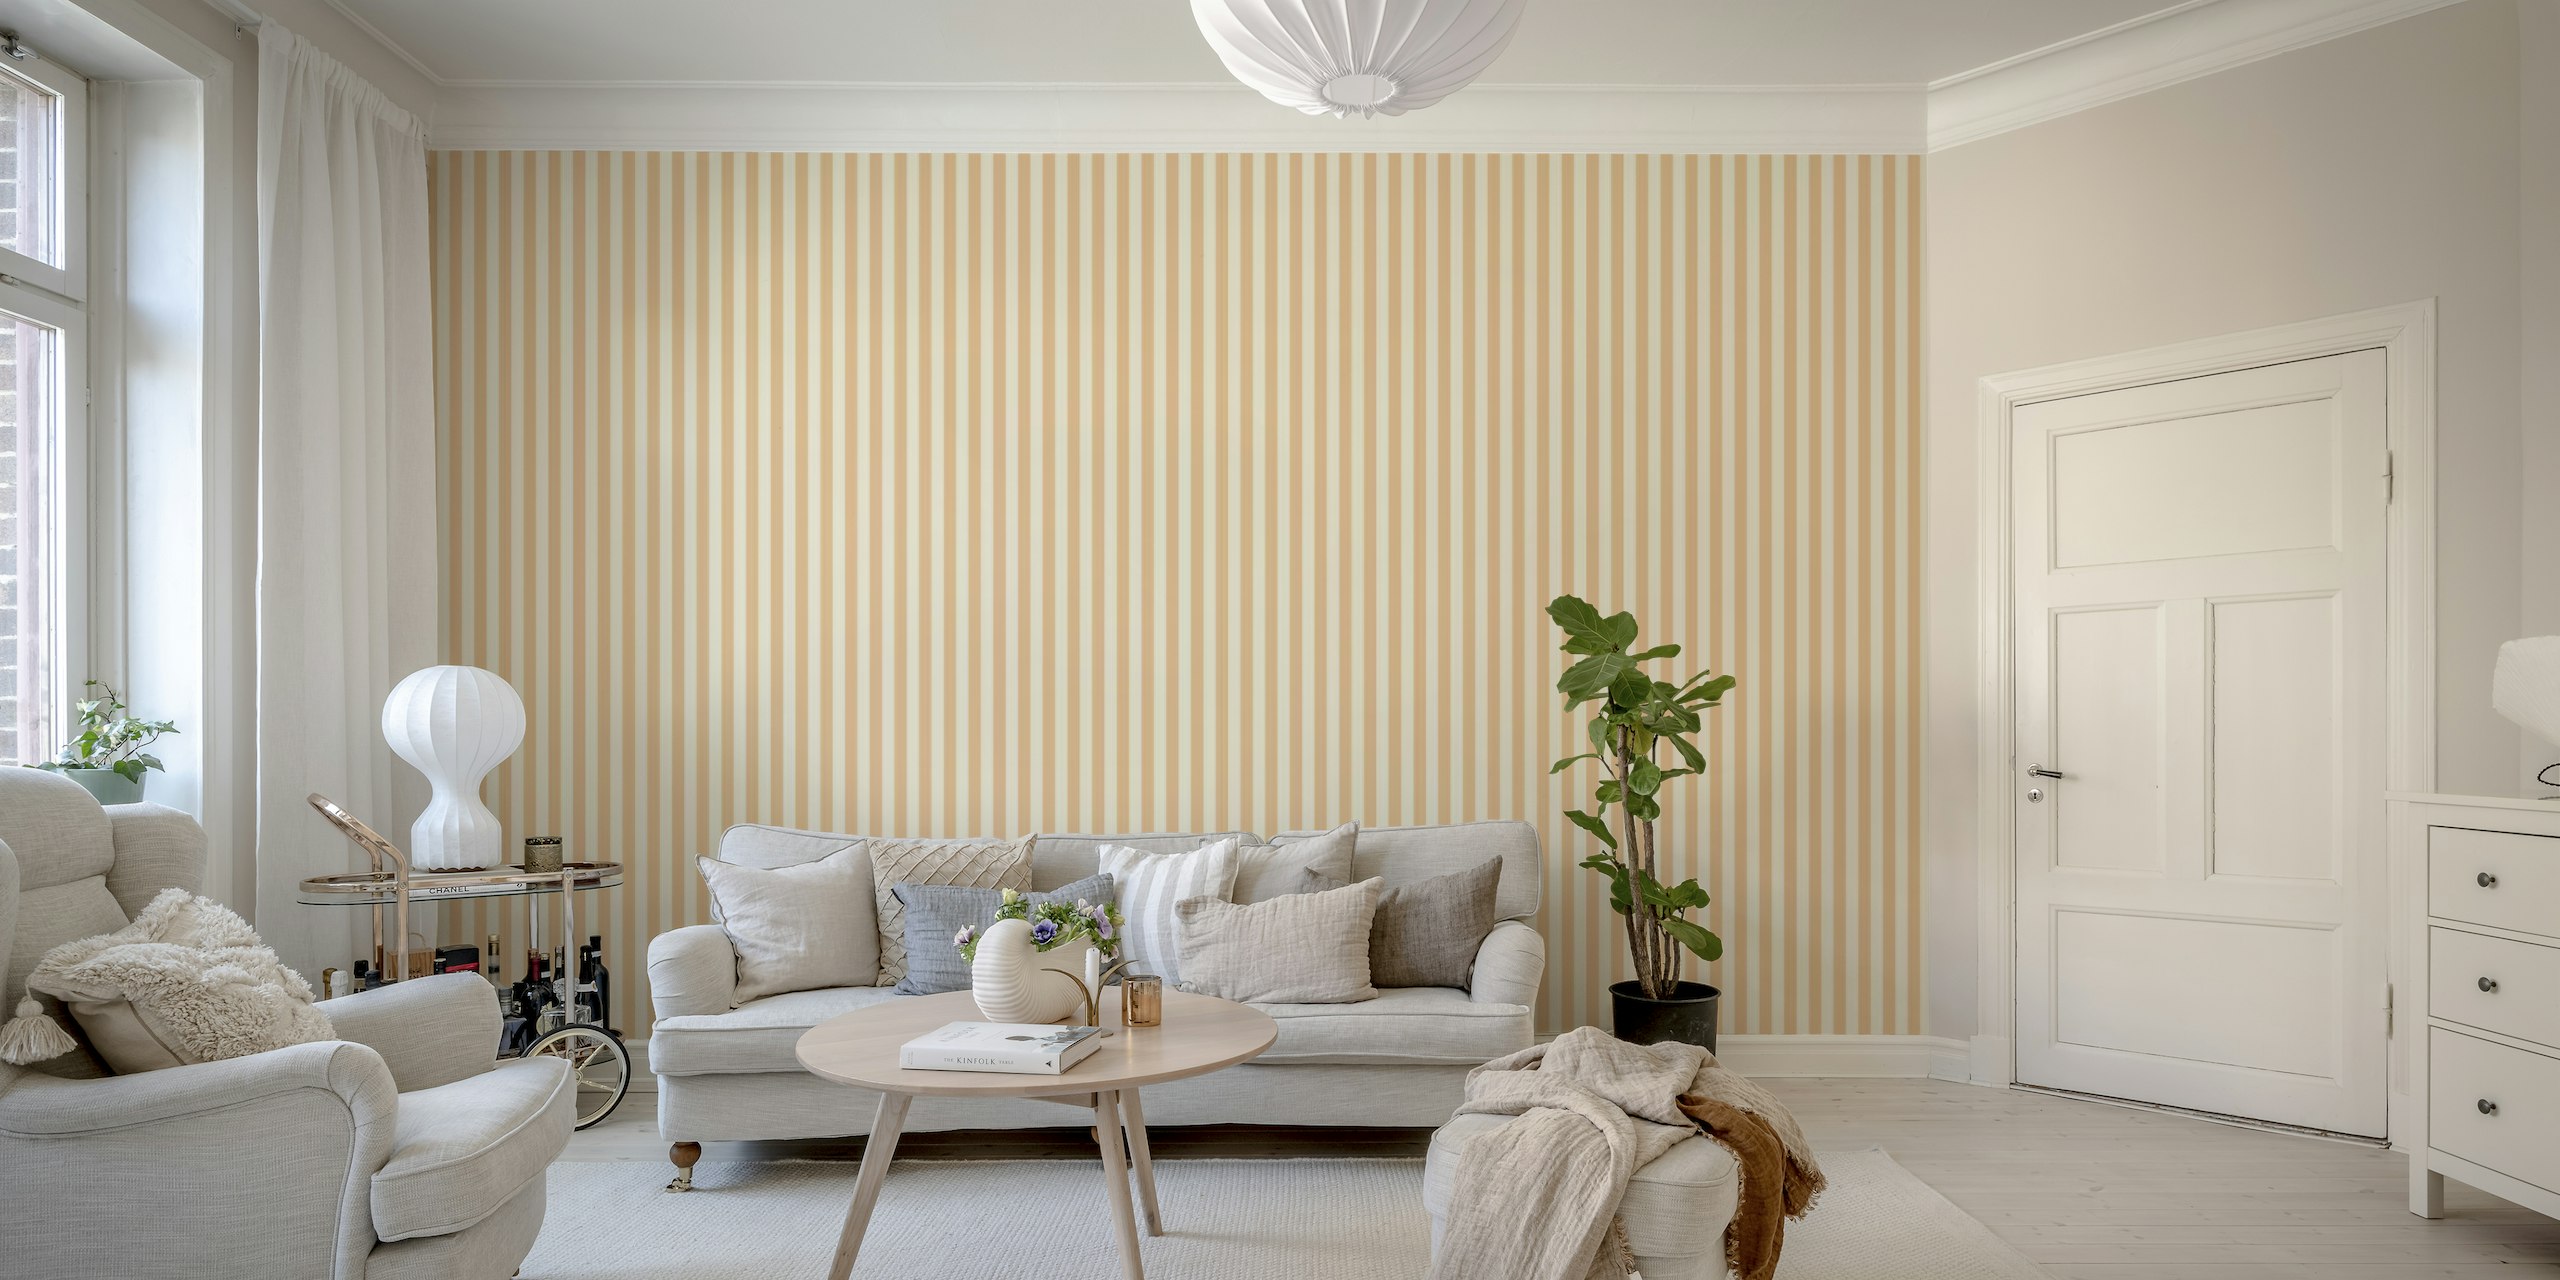 Stripes Normal Peach Fuzz - Ongerepte muurschildering met zachte perziktinten en minimalistisch design